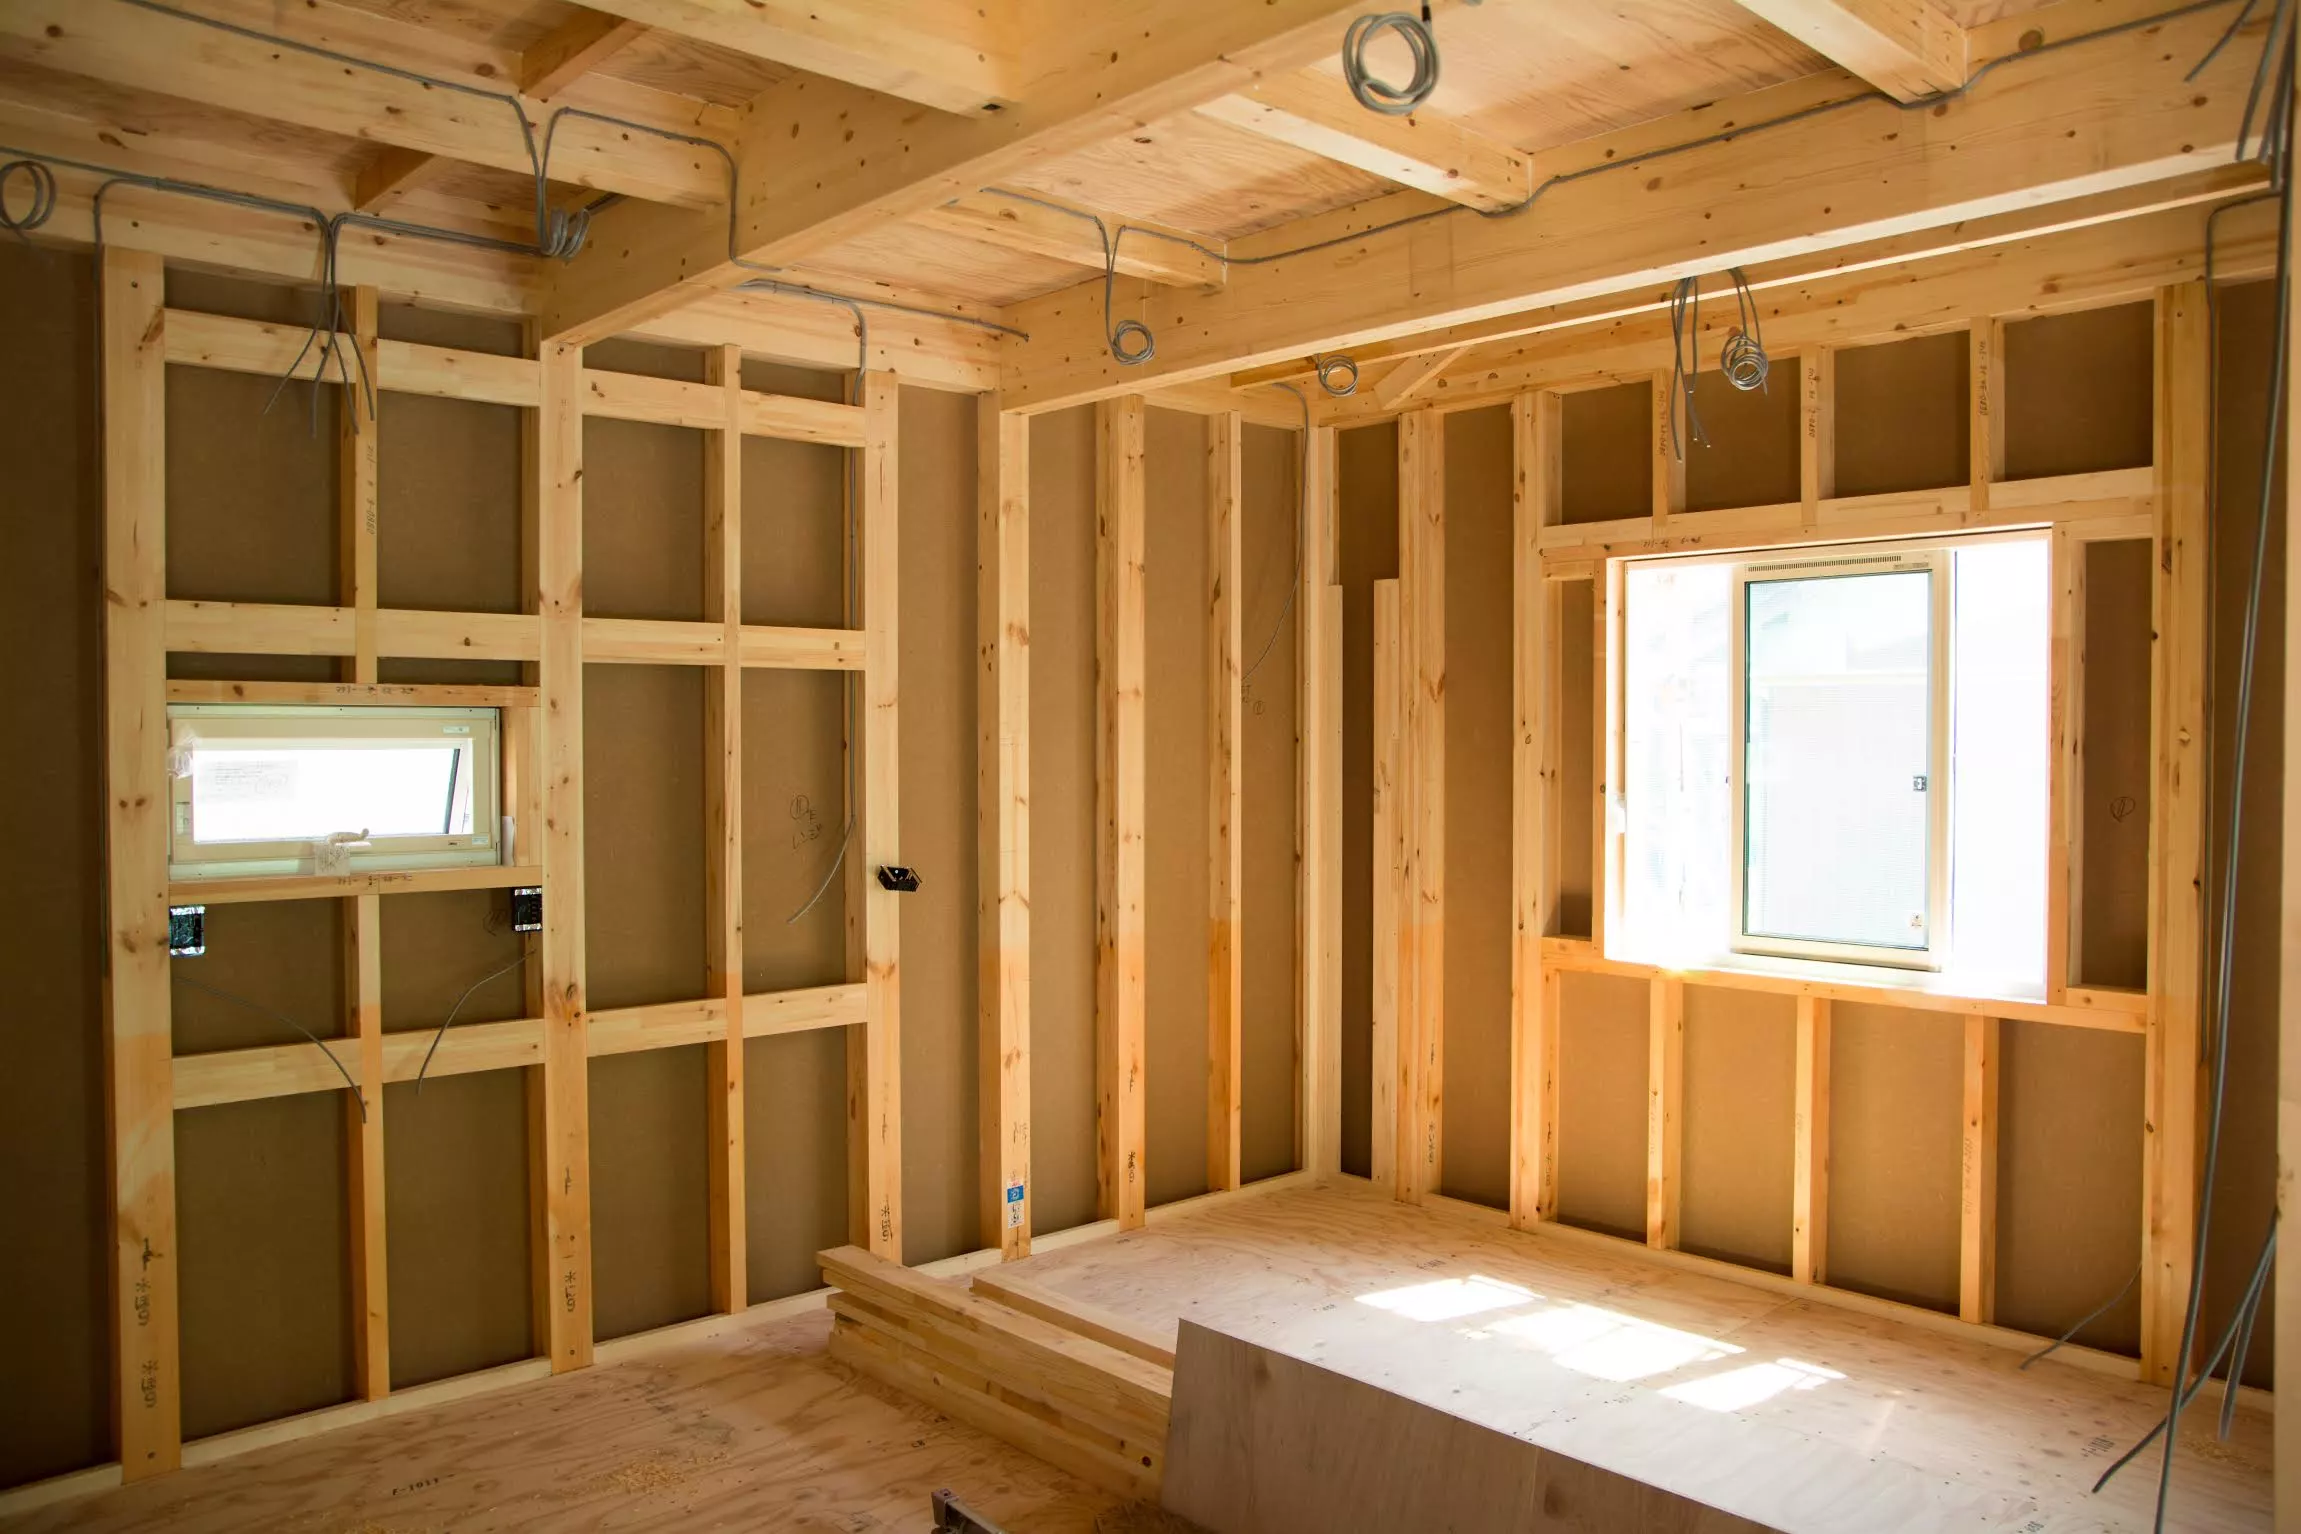 Interior of half-built wooden building. Image: Shutterstock via Giles Pegram